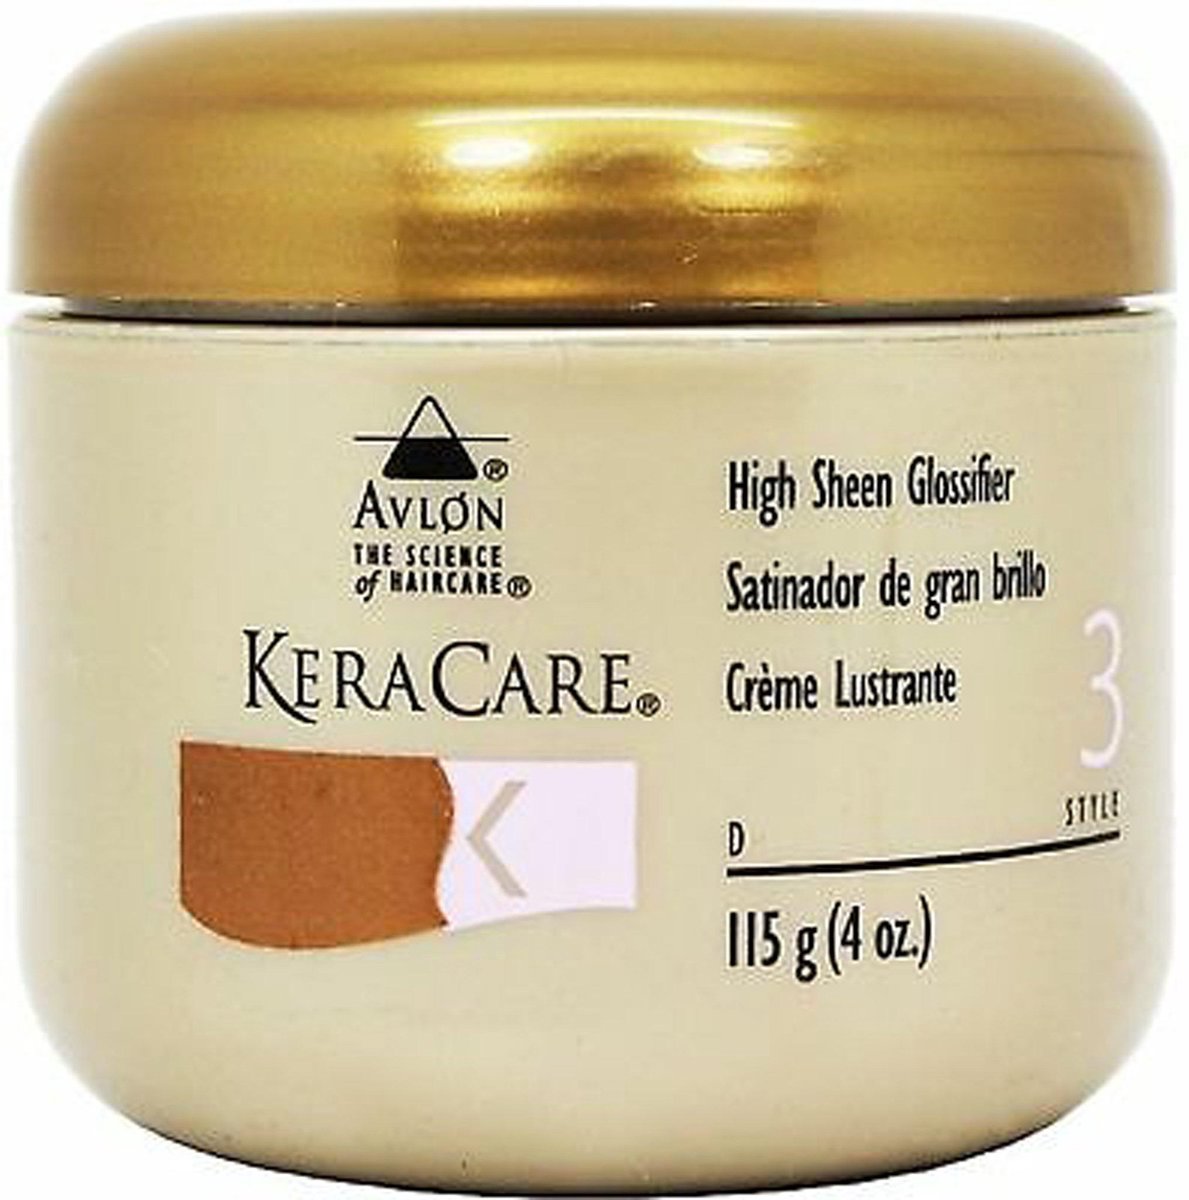 KeraCare High Sheen Glossifier - 115 gr